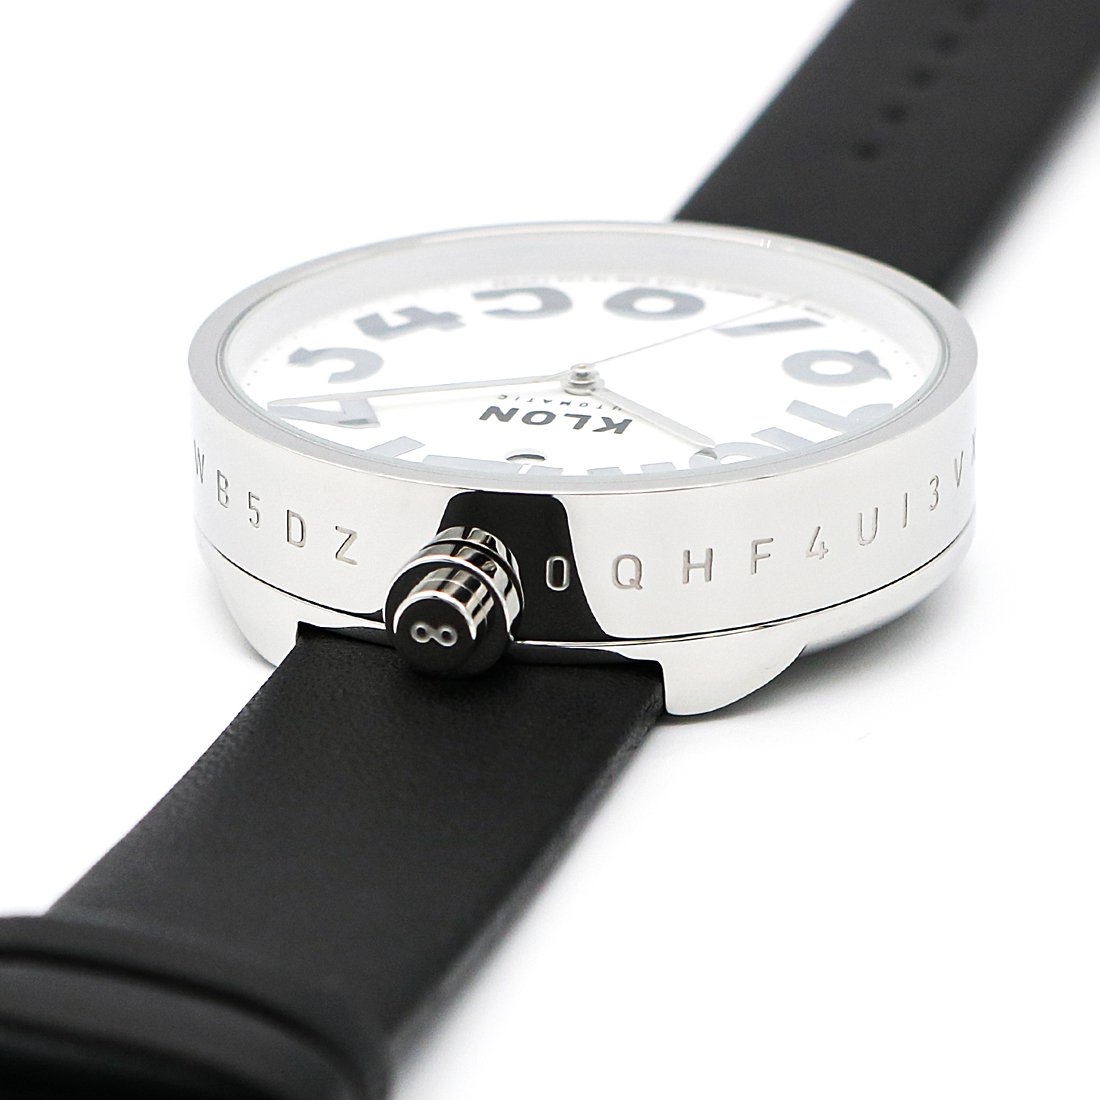 KLON AUTOMATIC WATCH BLACK LEATHER -HIDE TIME- 43mm カジュアル 腕時計